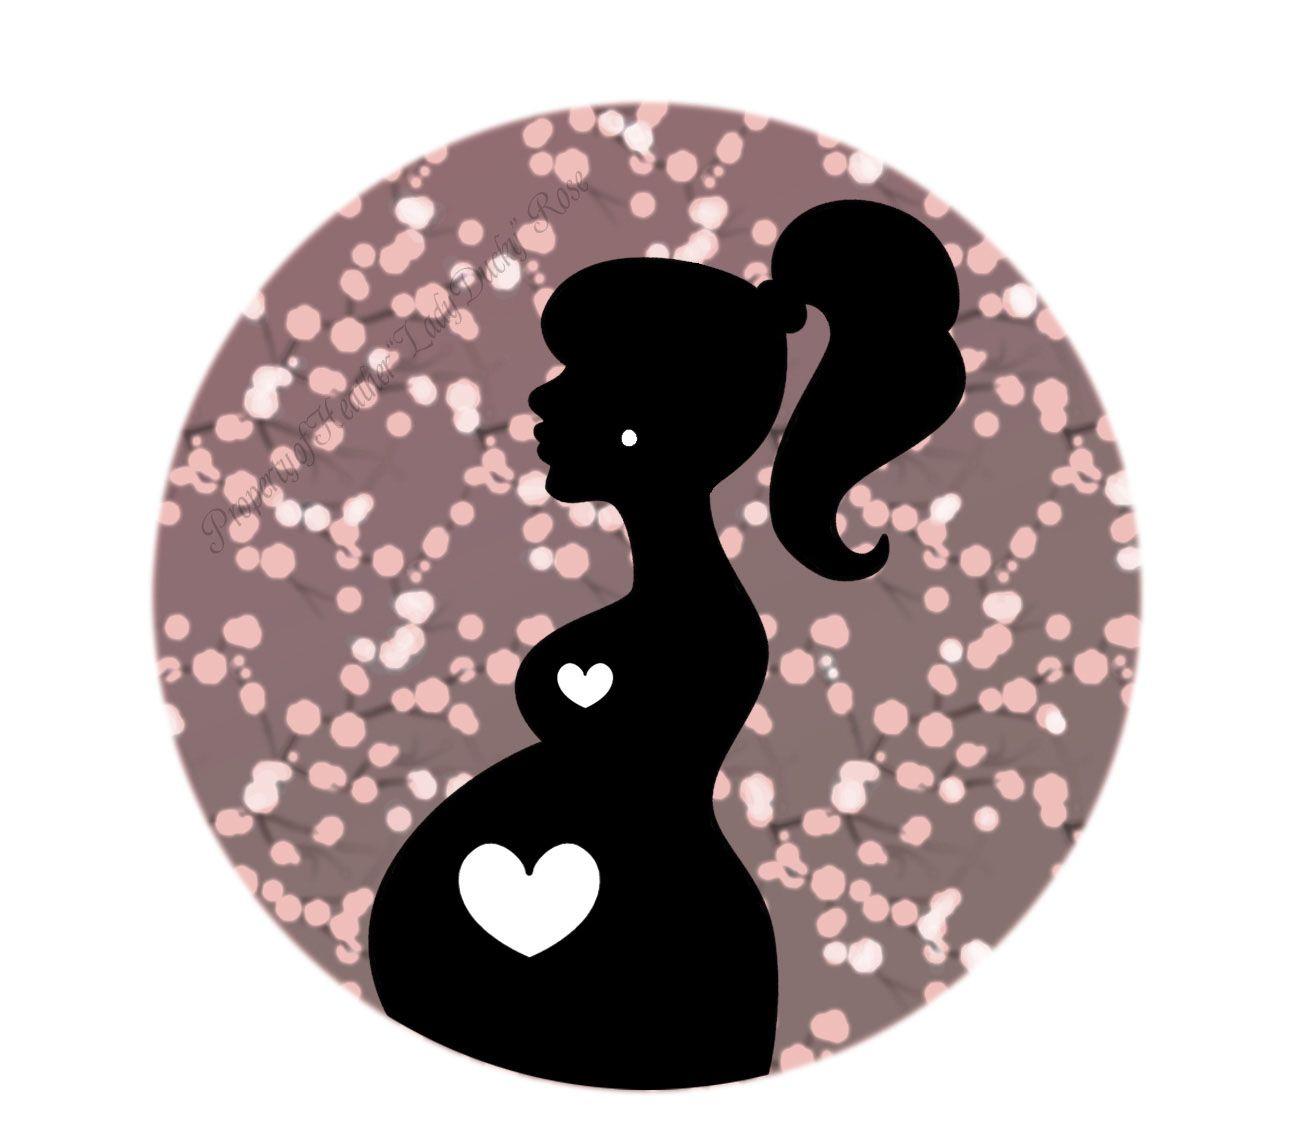 Midwife Logo - Commission: Midwife Logo Design